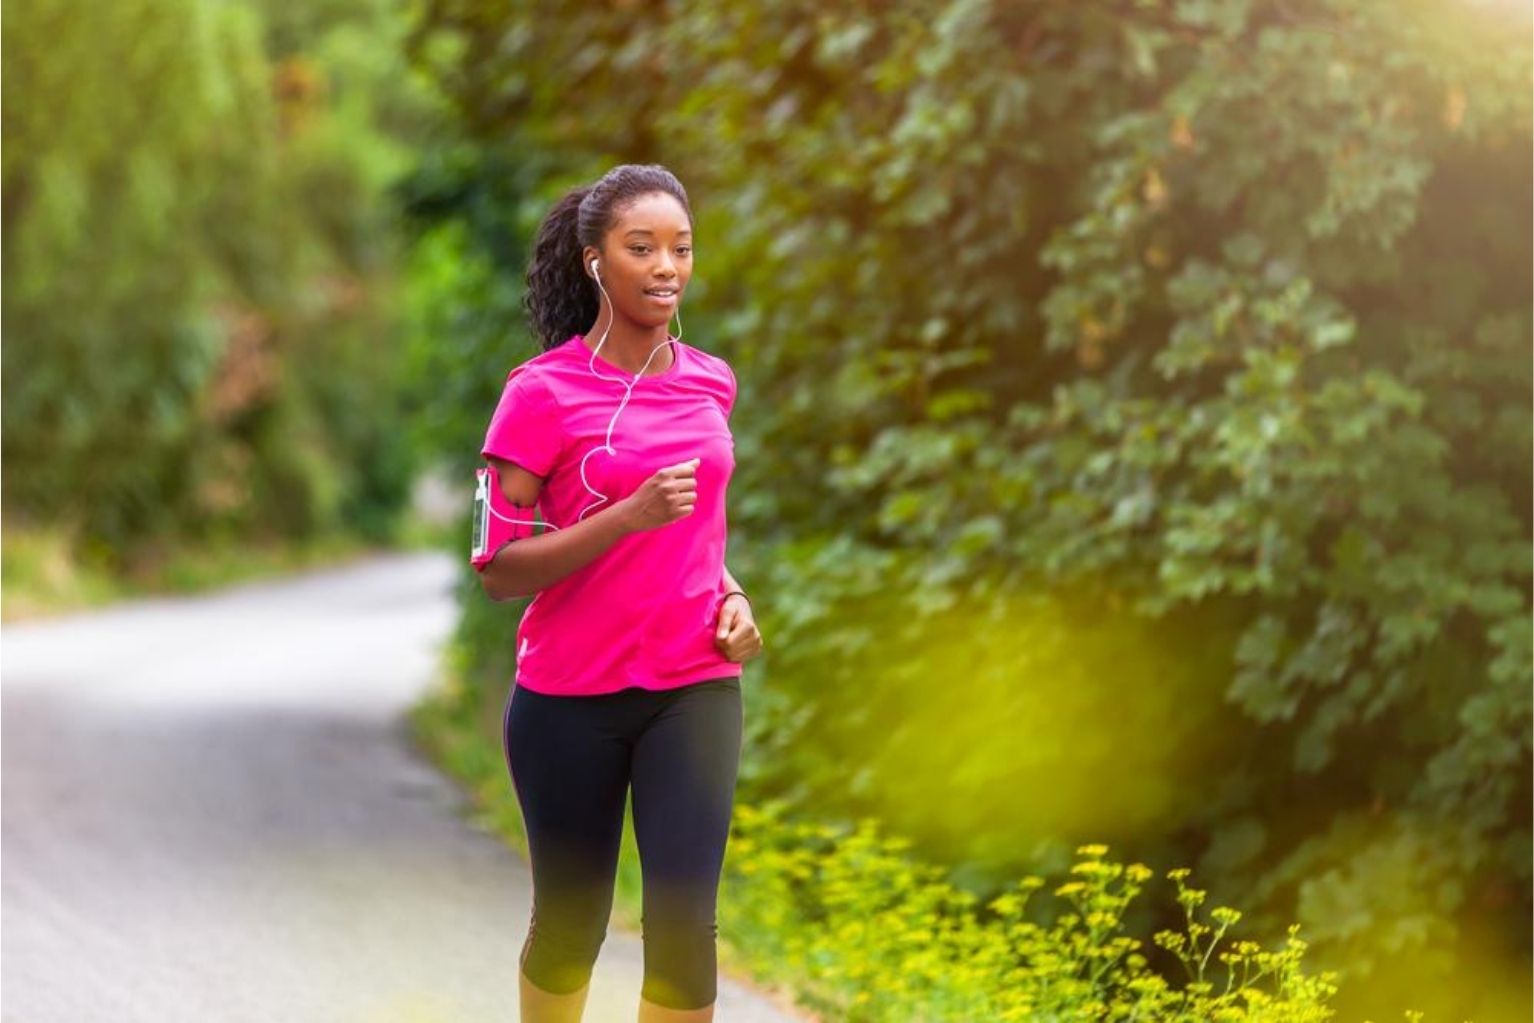 Woman in a bright pink shirt running along an outdoor trail